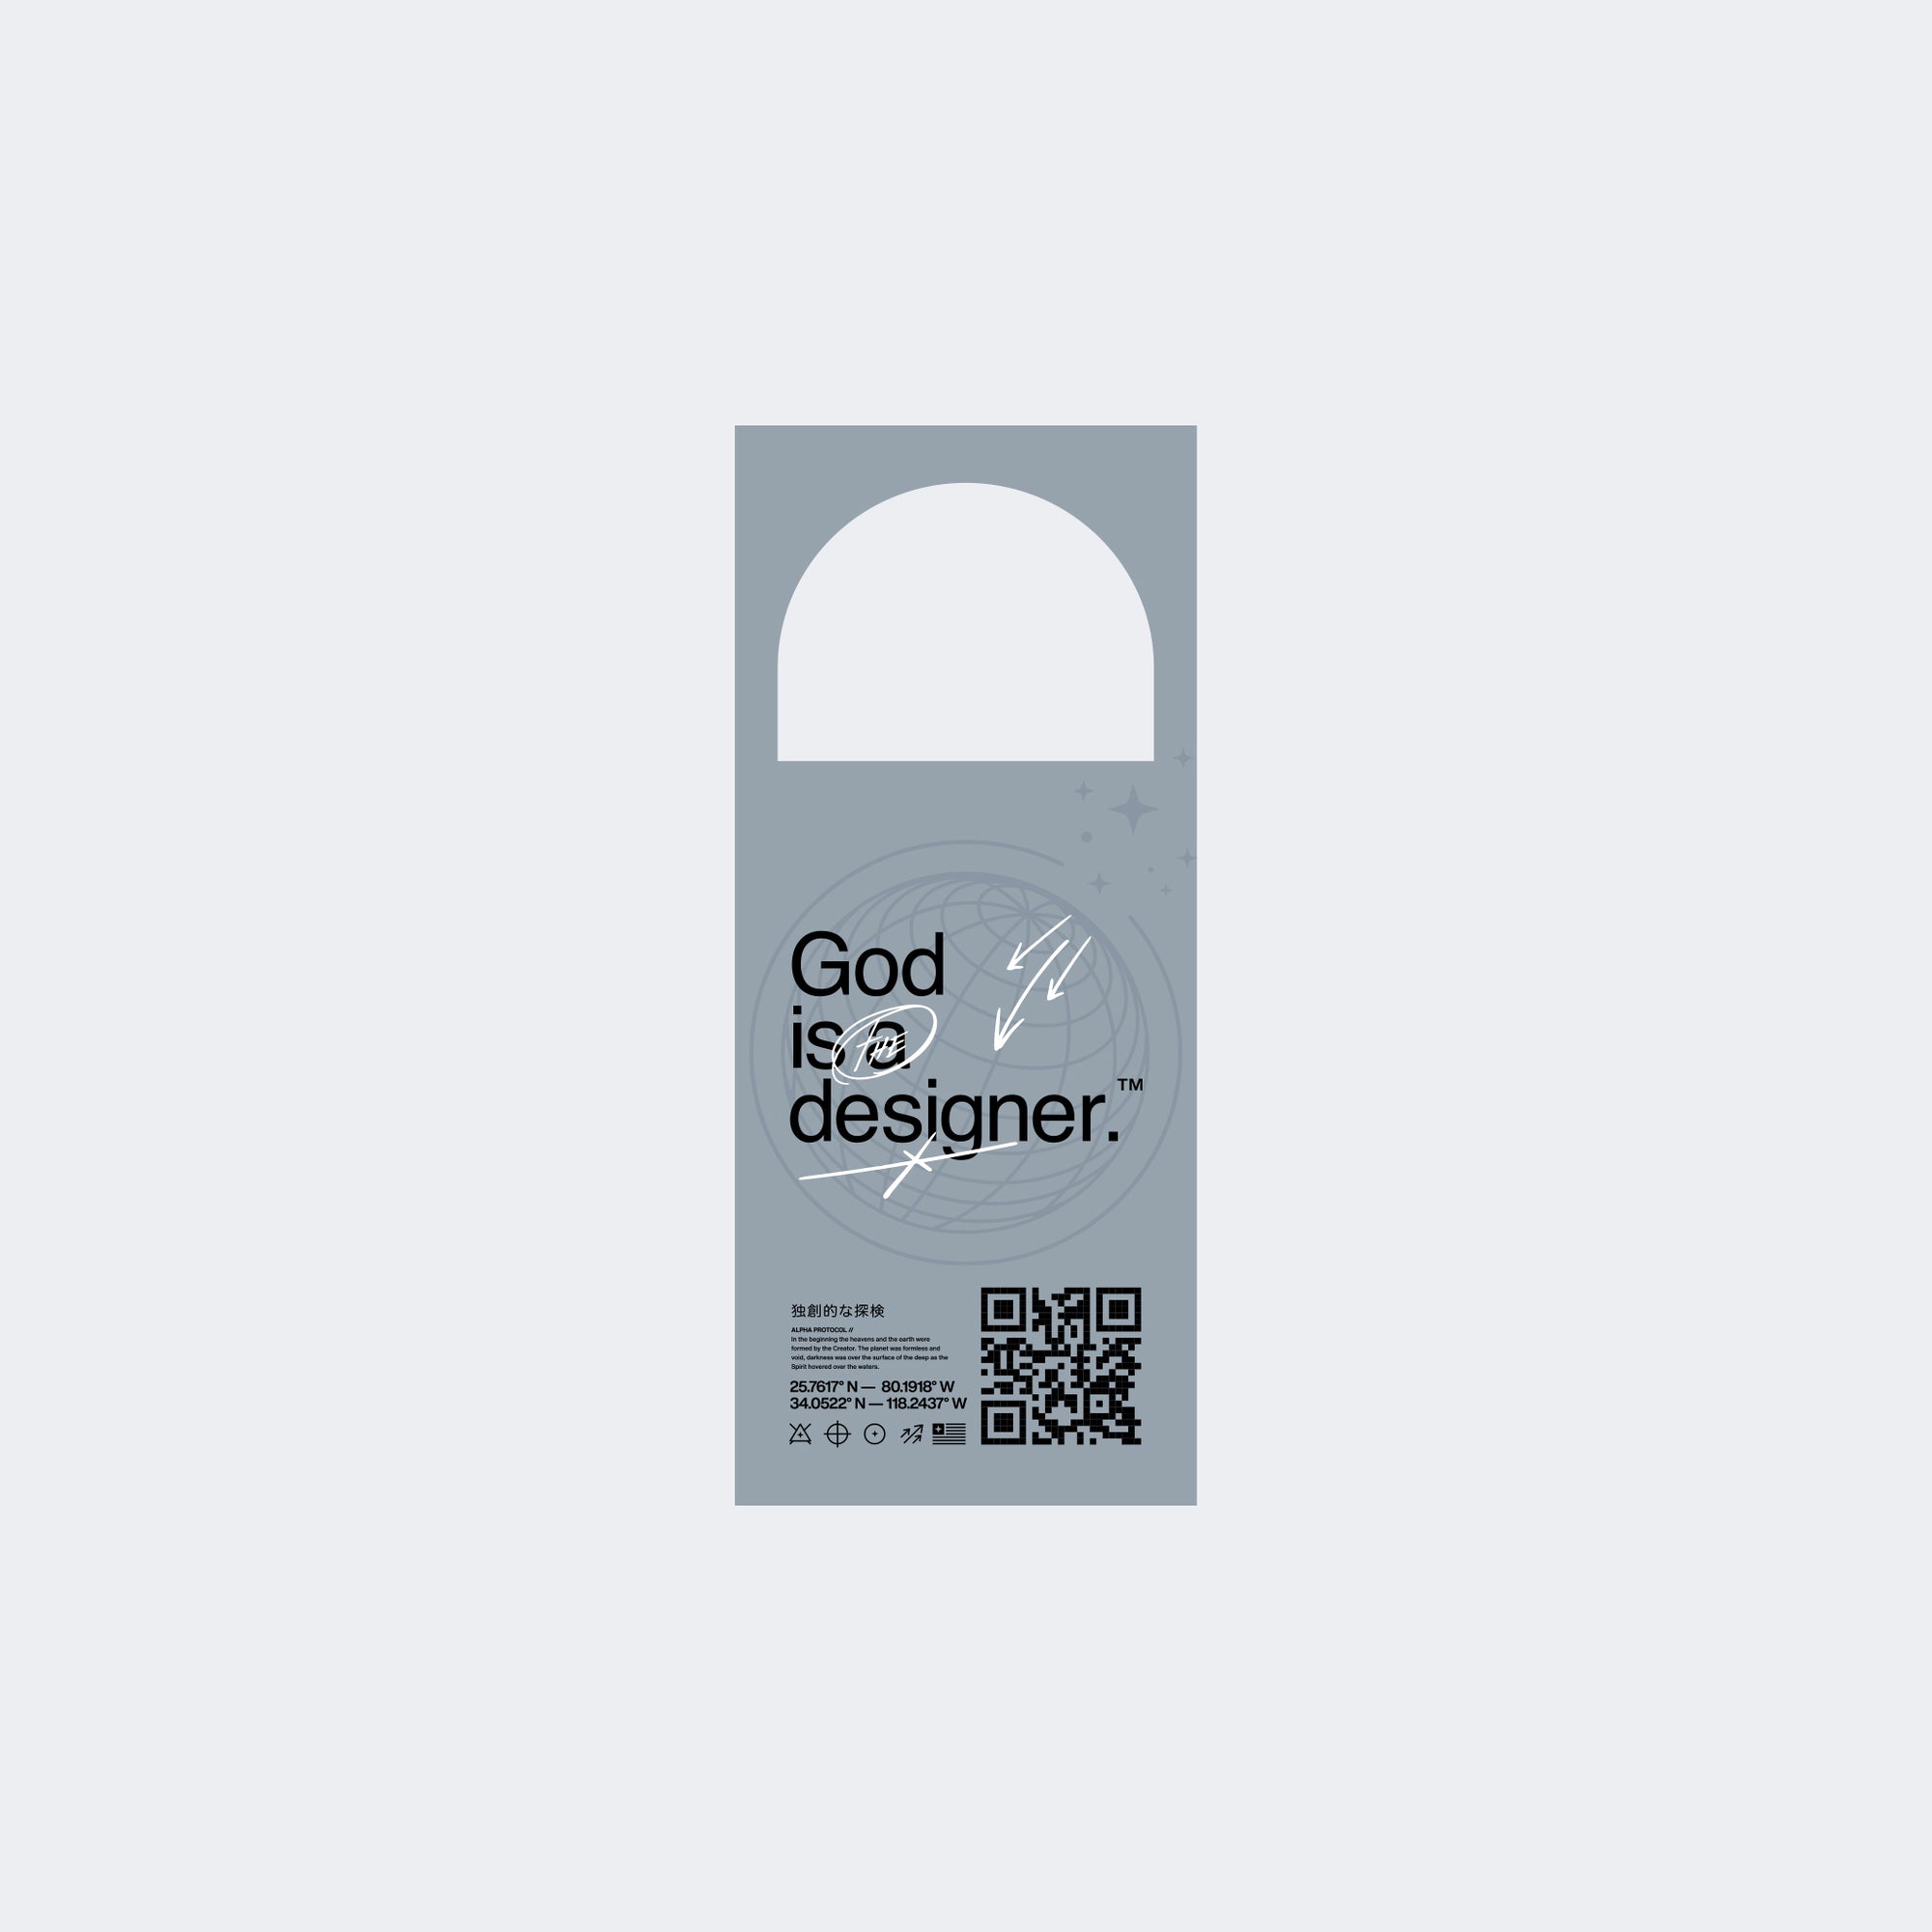 GIAD™ Interruption Shield - God is a designer.®